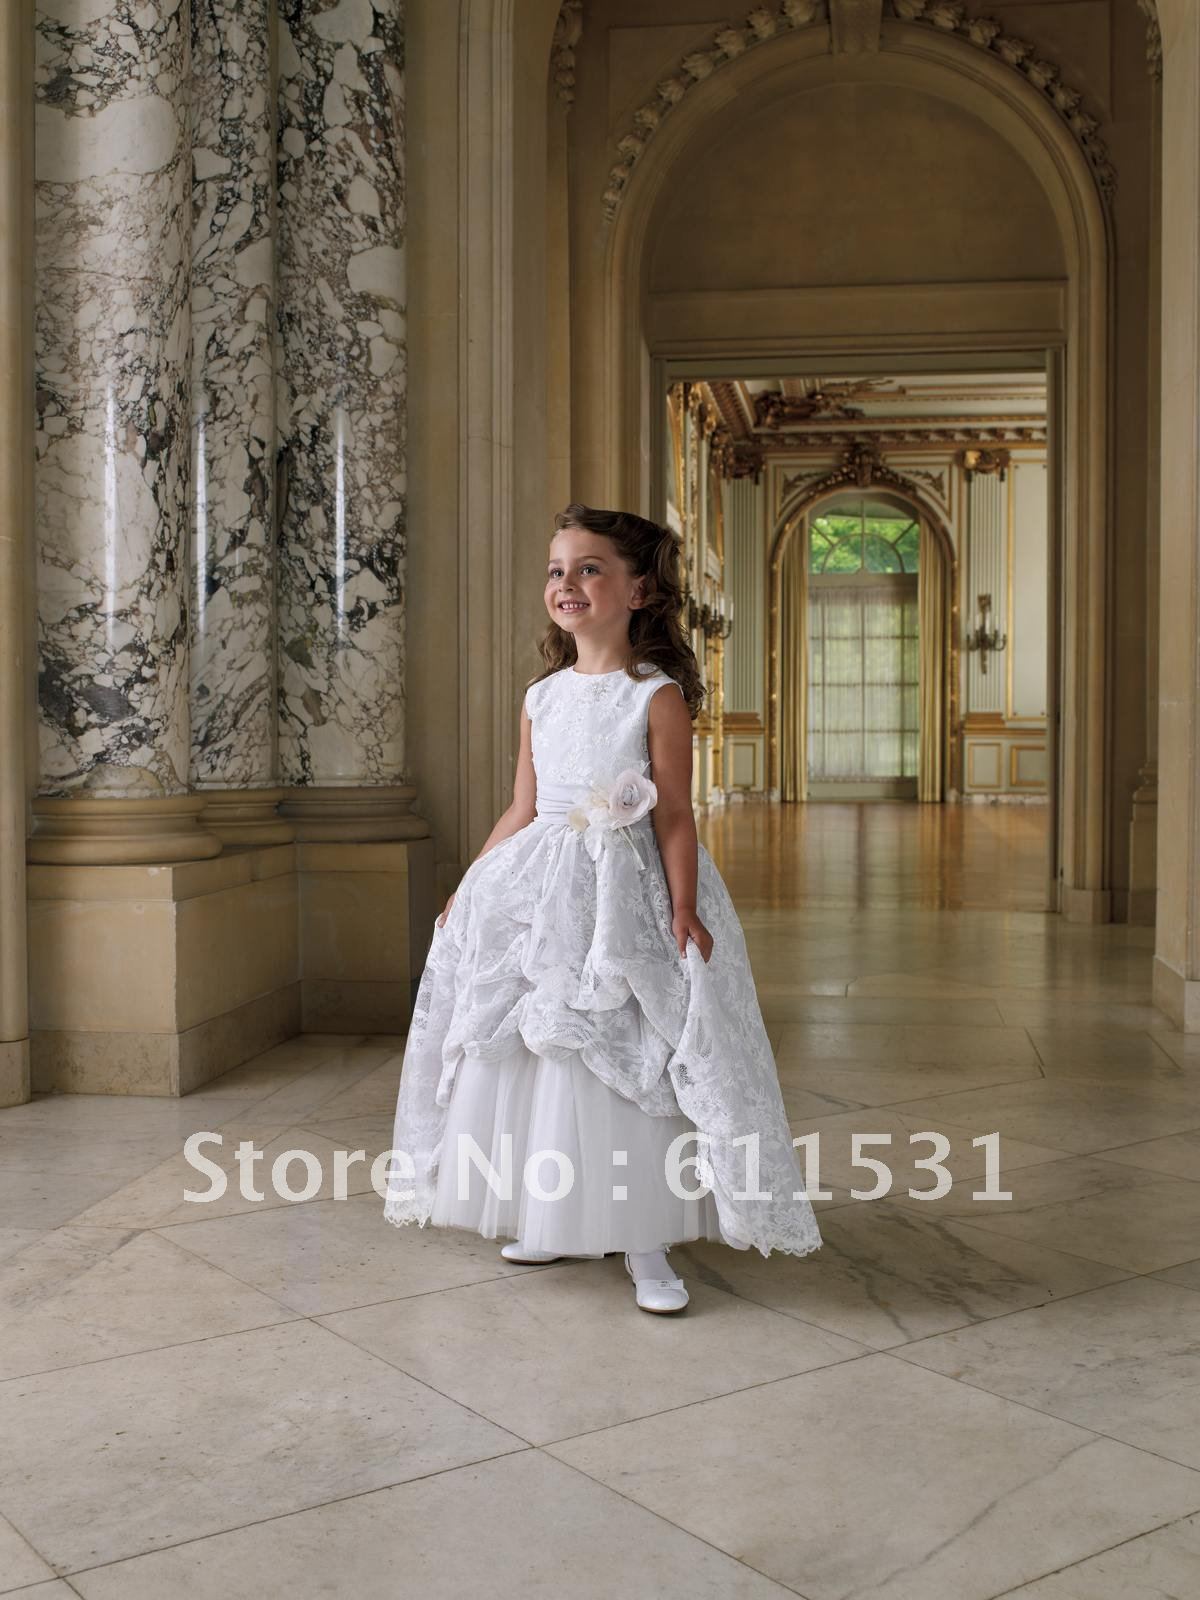 New Arrival 2012 !! Princess Ball Gown Ankle Length Flower Waist Flower Girl Dresses Free Shipping Custom Made